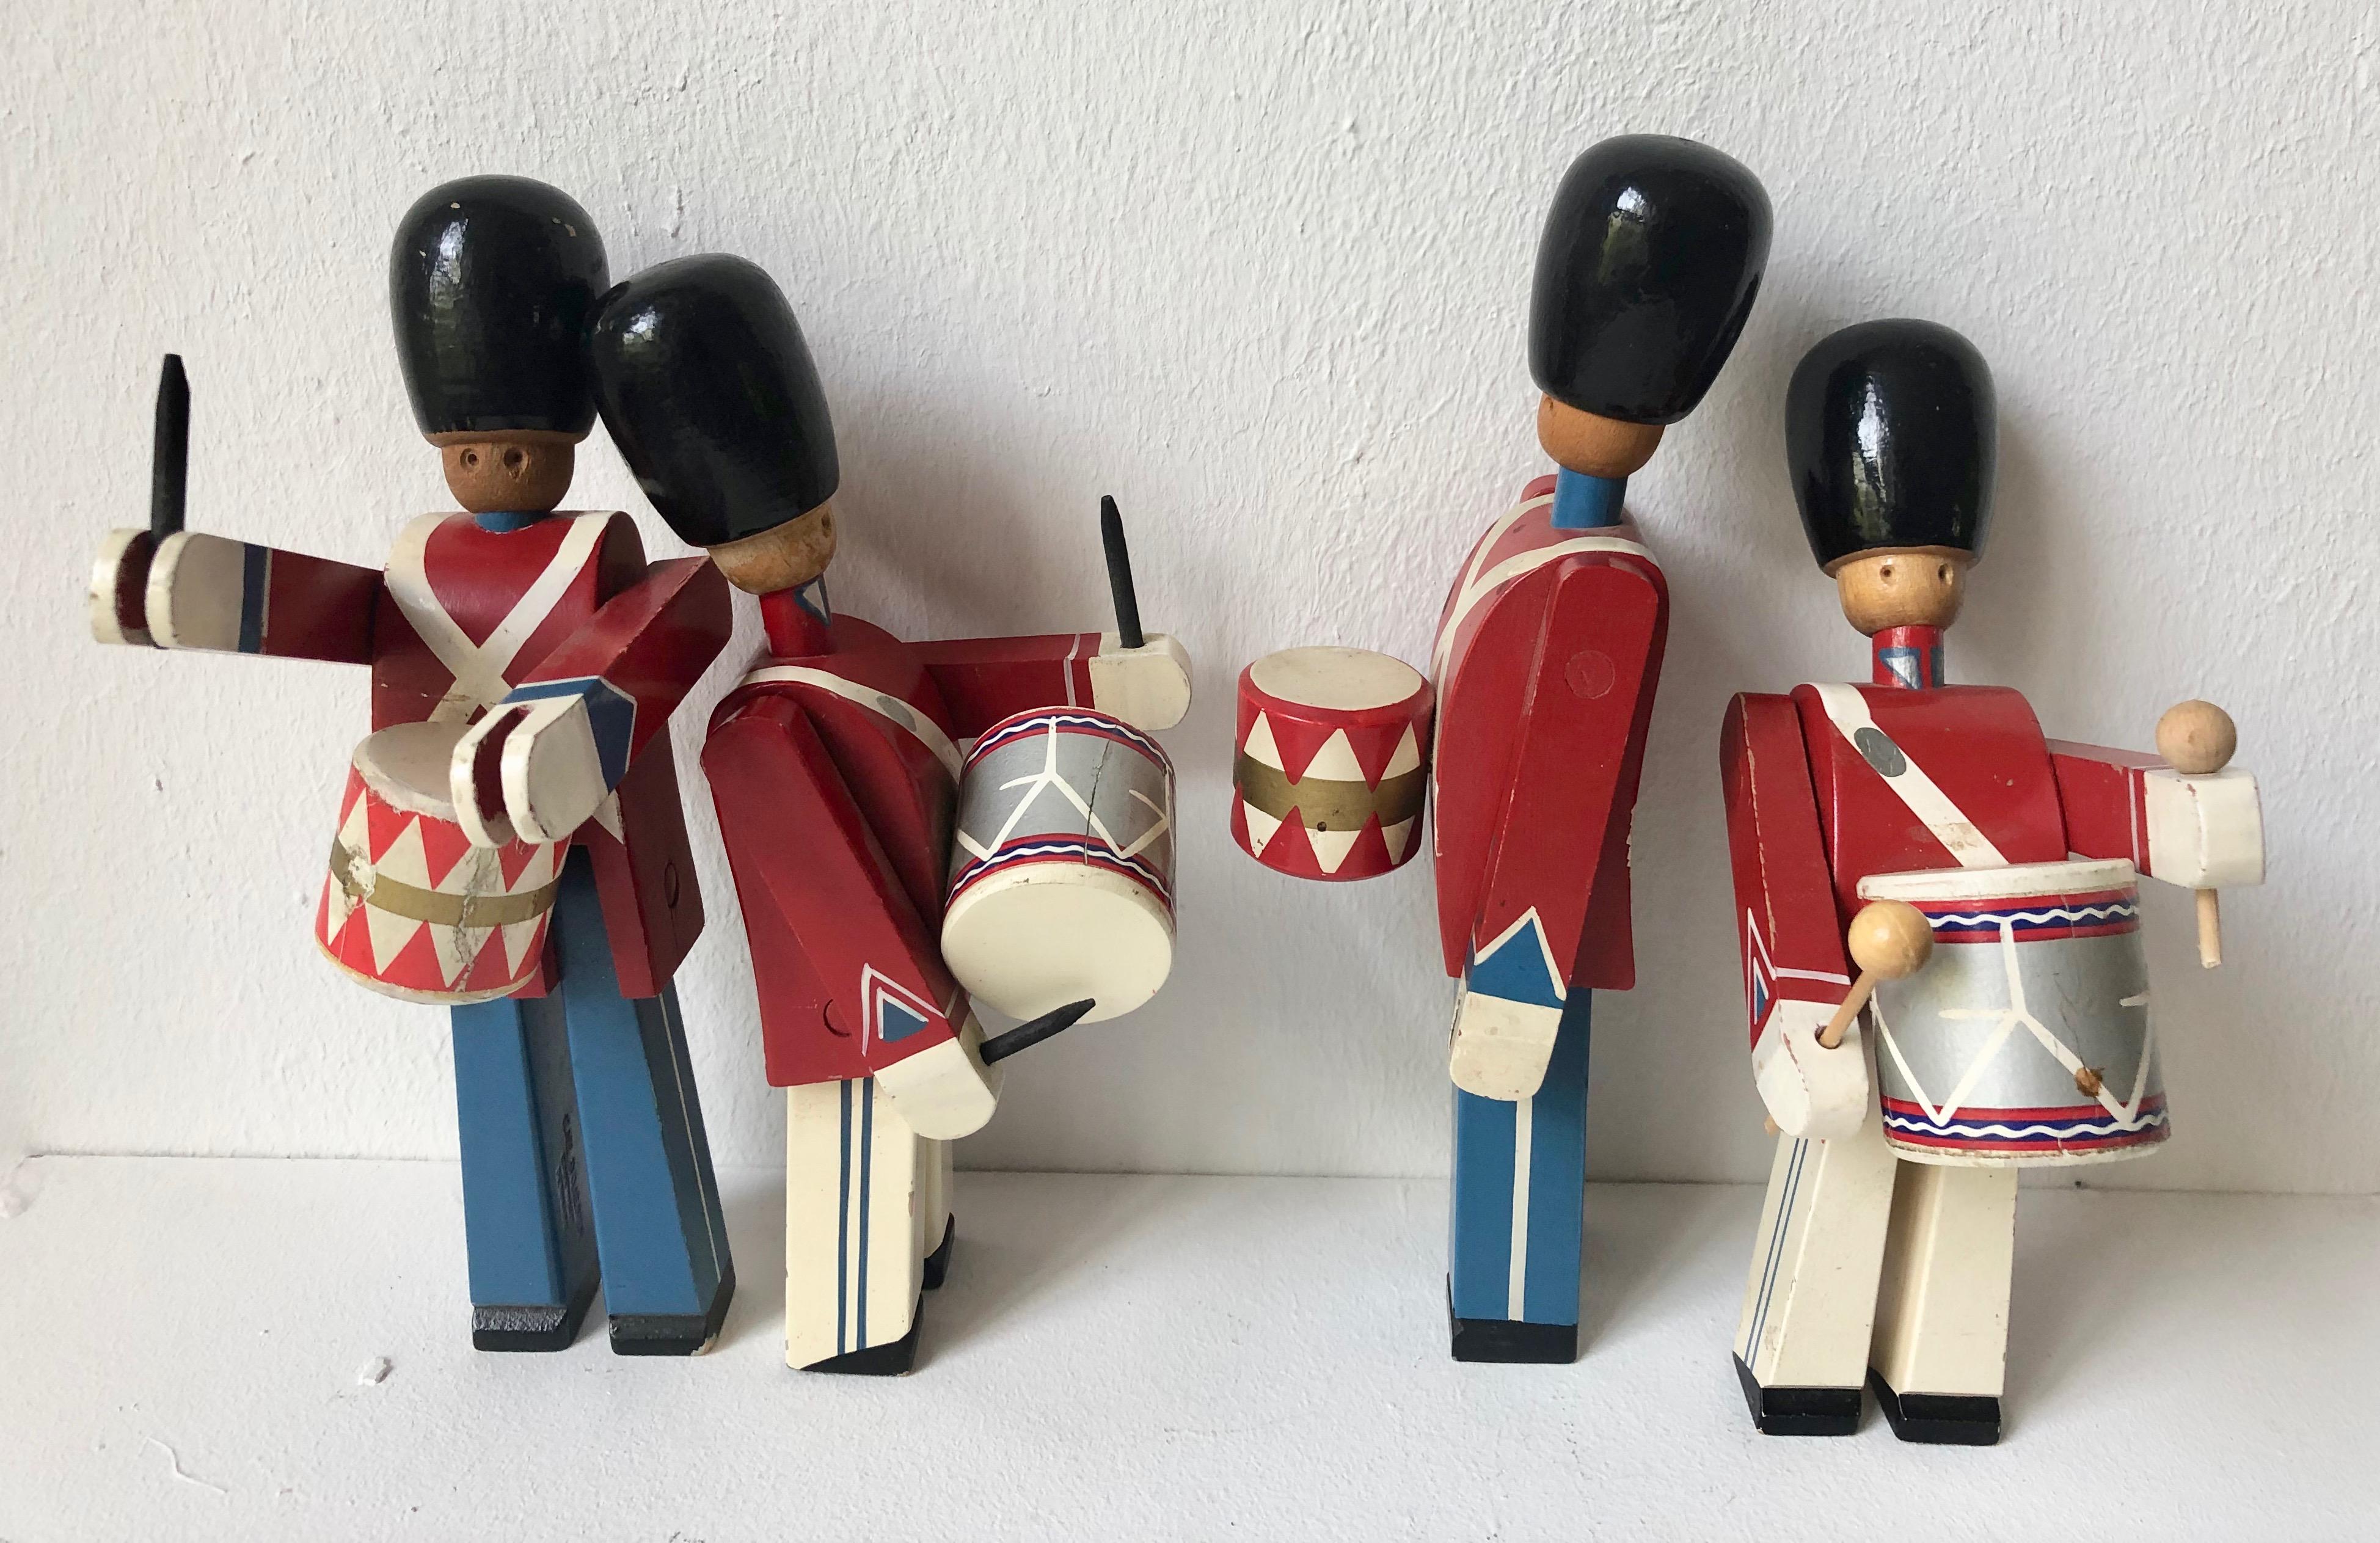 12 Vintage Royal Guardsmen by Kay Bojesen from 1950s 1